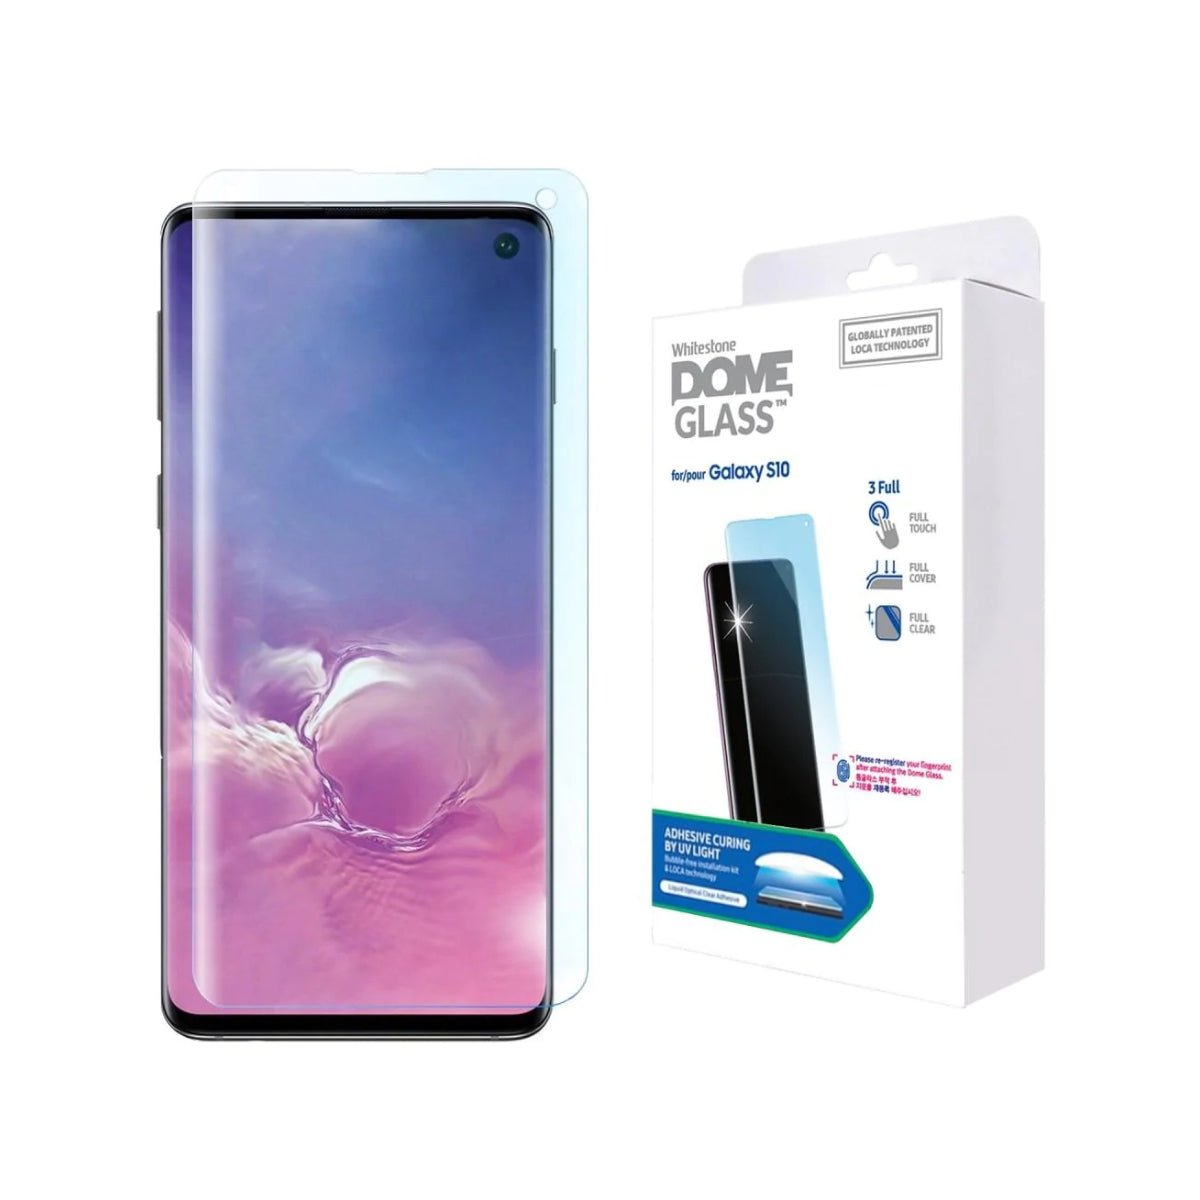 Whitestone Dome Glass Samsung Galaxy S10 Screen Protector - واقي شاشة - Store 974 | ستور ٩٧٤